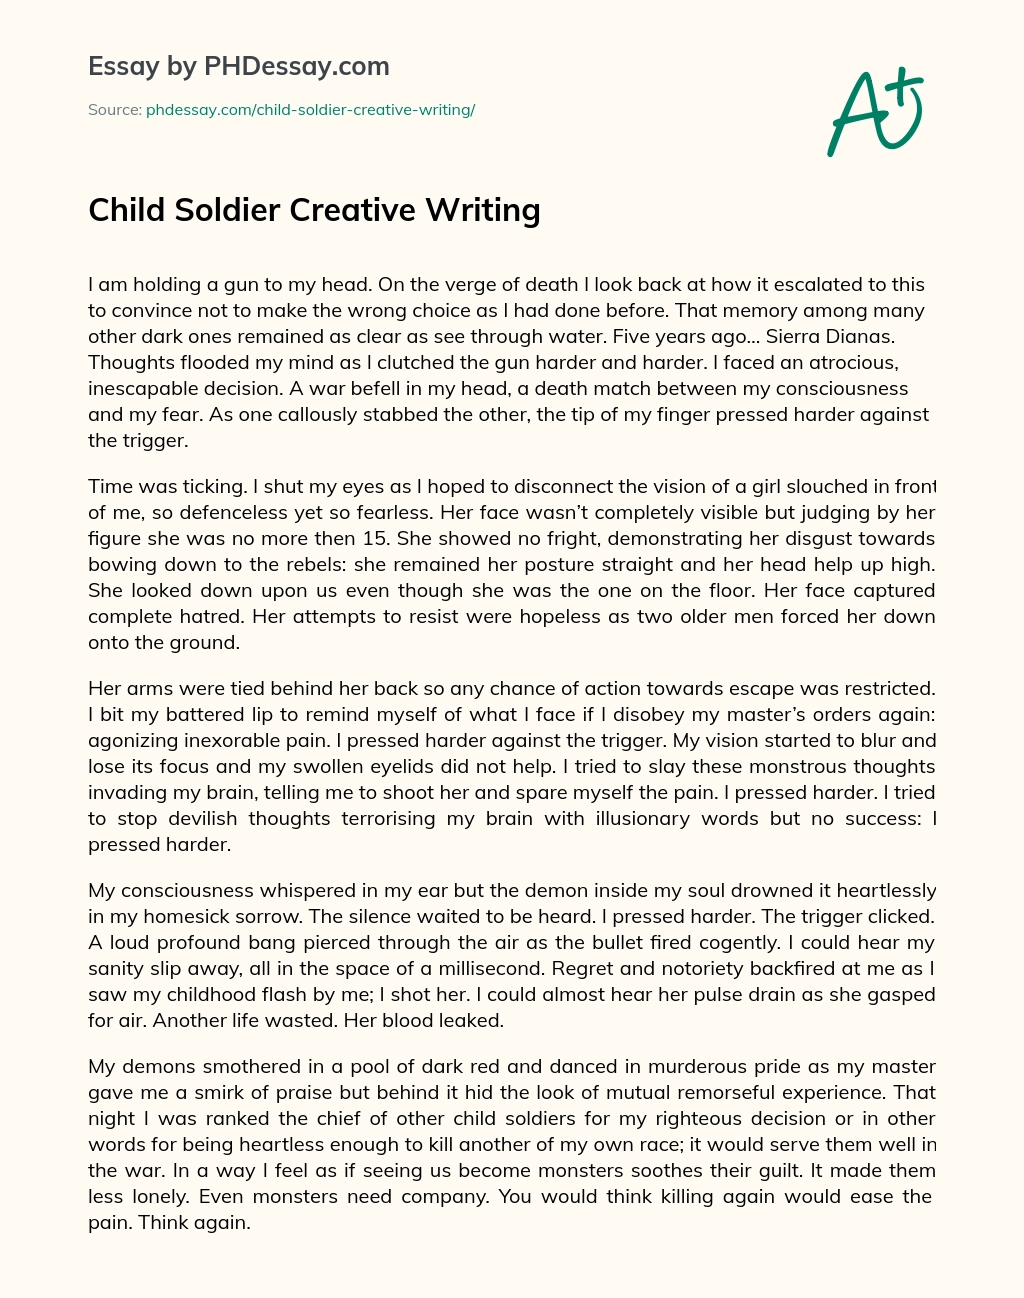 Child Soldier Creative Writing essay